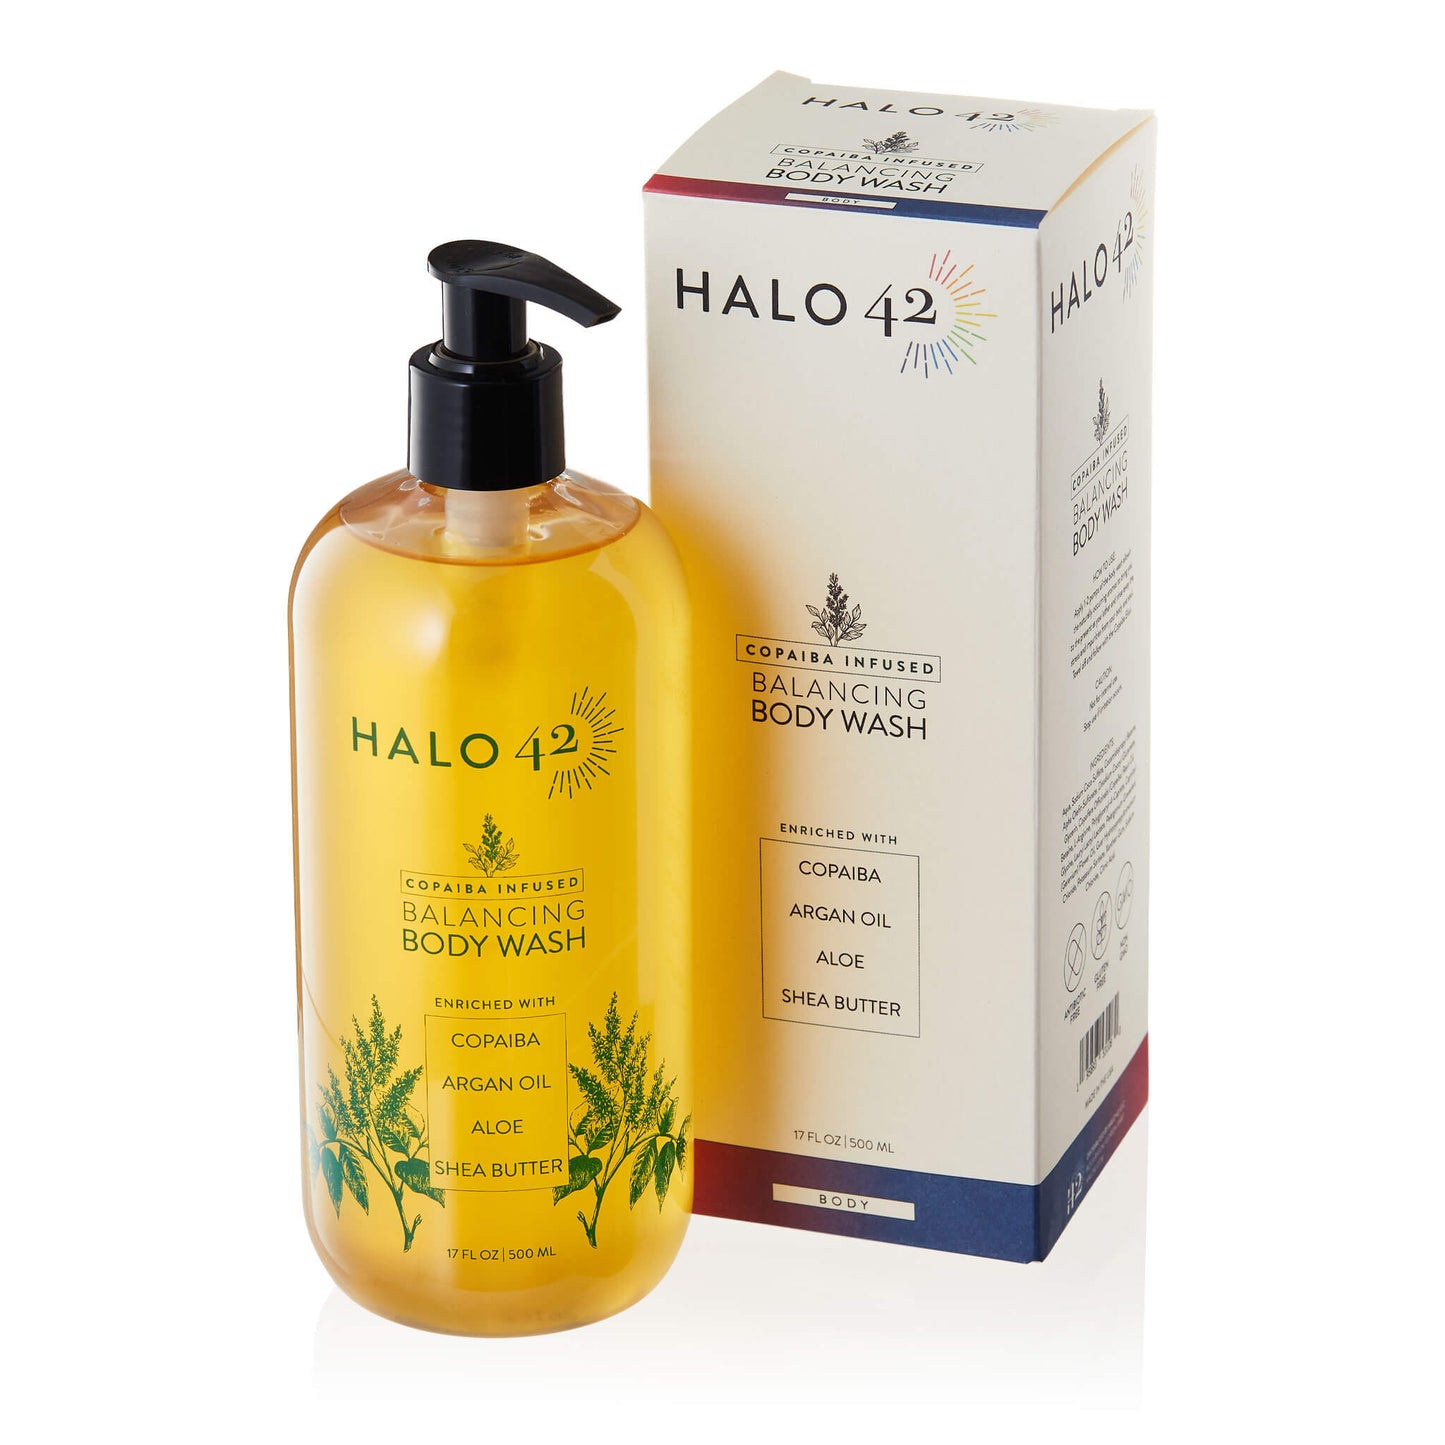 
                  
                    Halo42 skincare copaiba infused balancing body wash bottle and box
                  
                